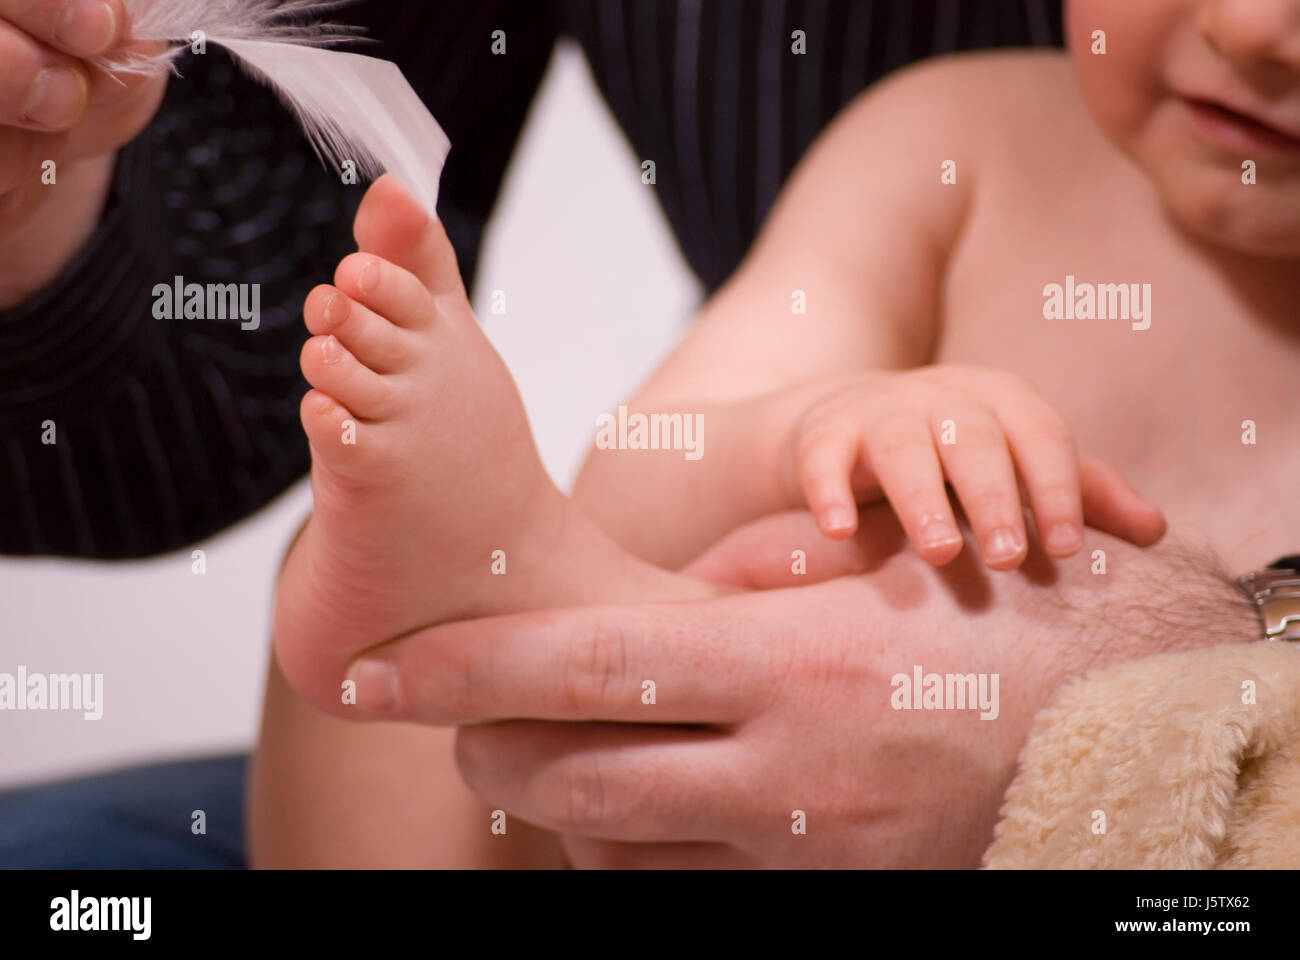 baby feet tickle penholders fountain-pen filler child hand hands lie lying lies Stock Photo